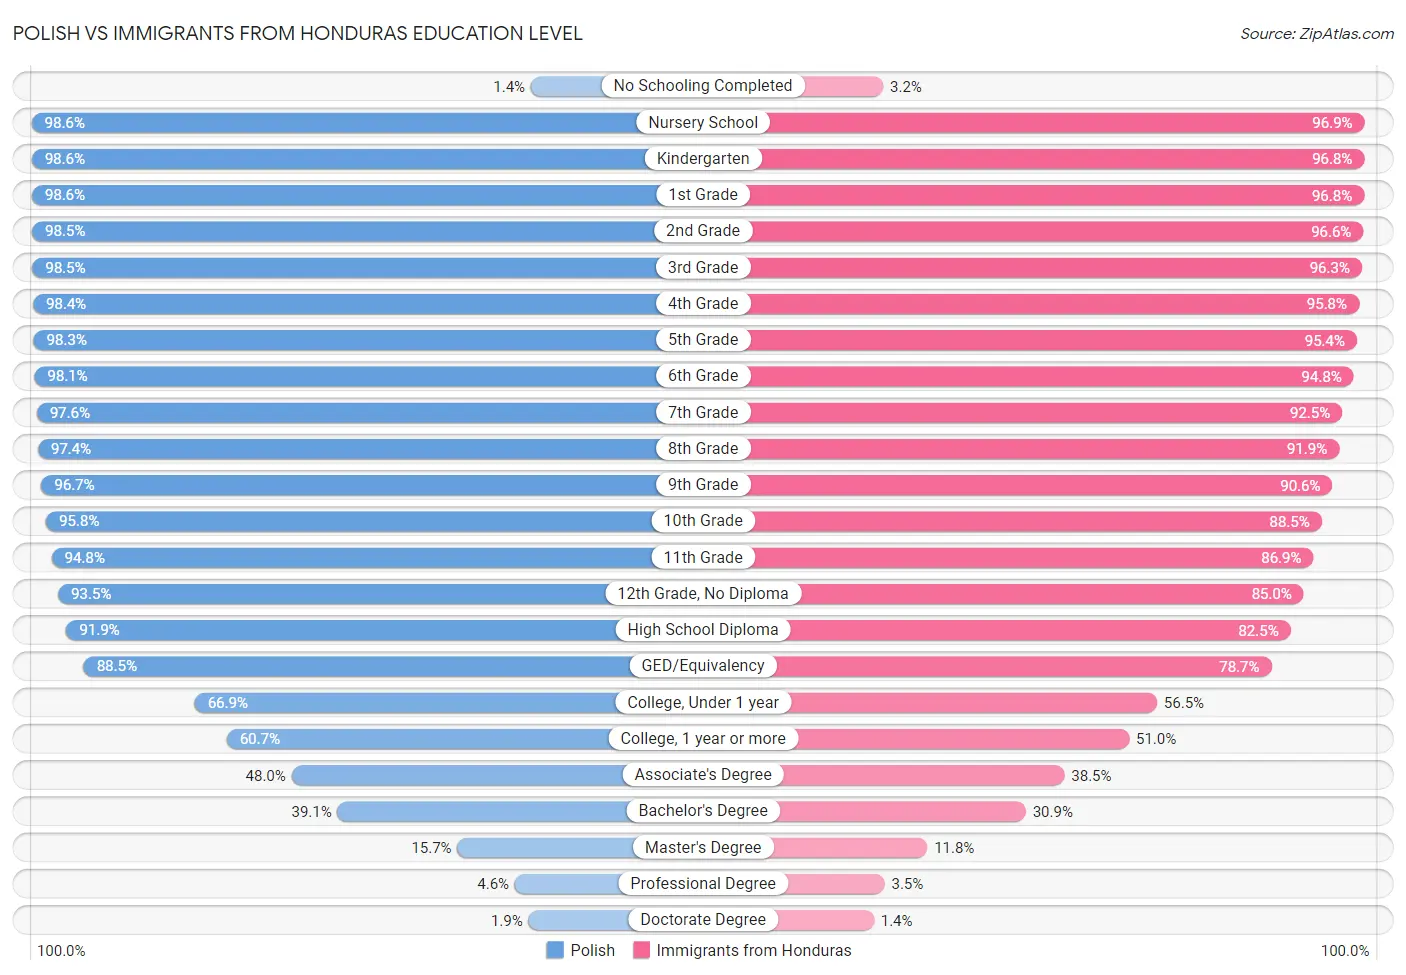 Polish vs Immigrants from Honduras Education Level